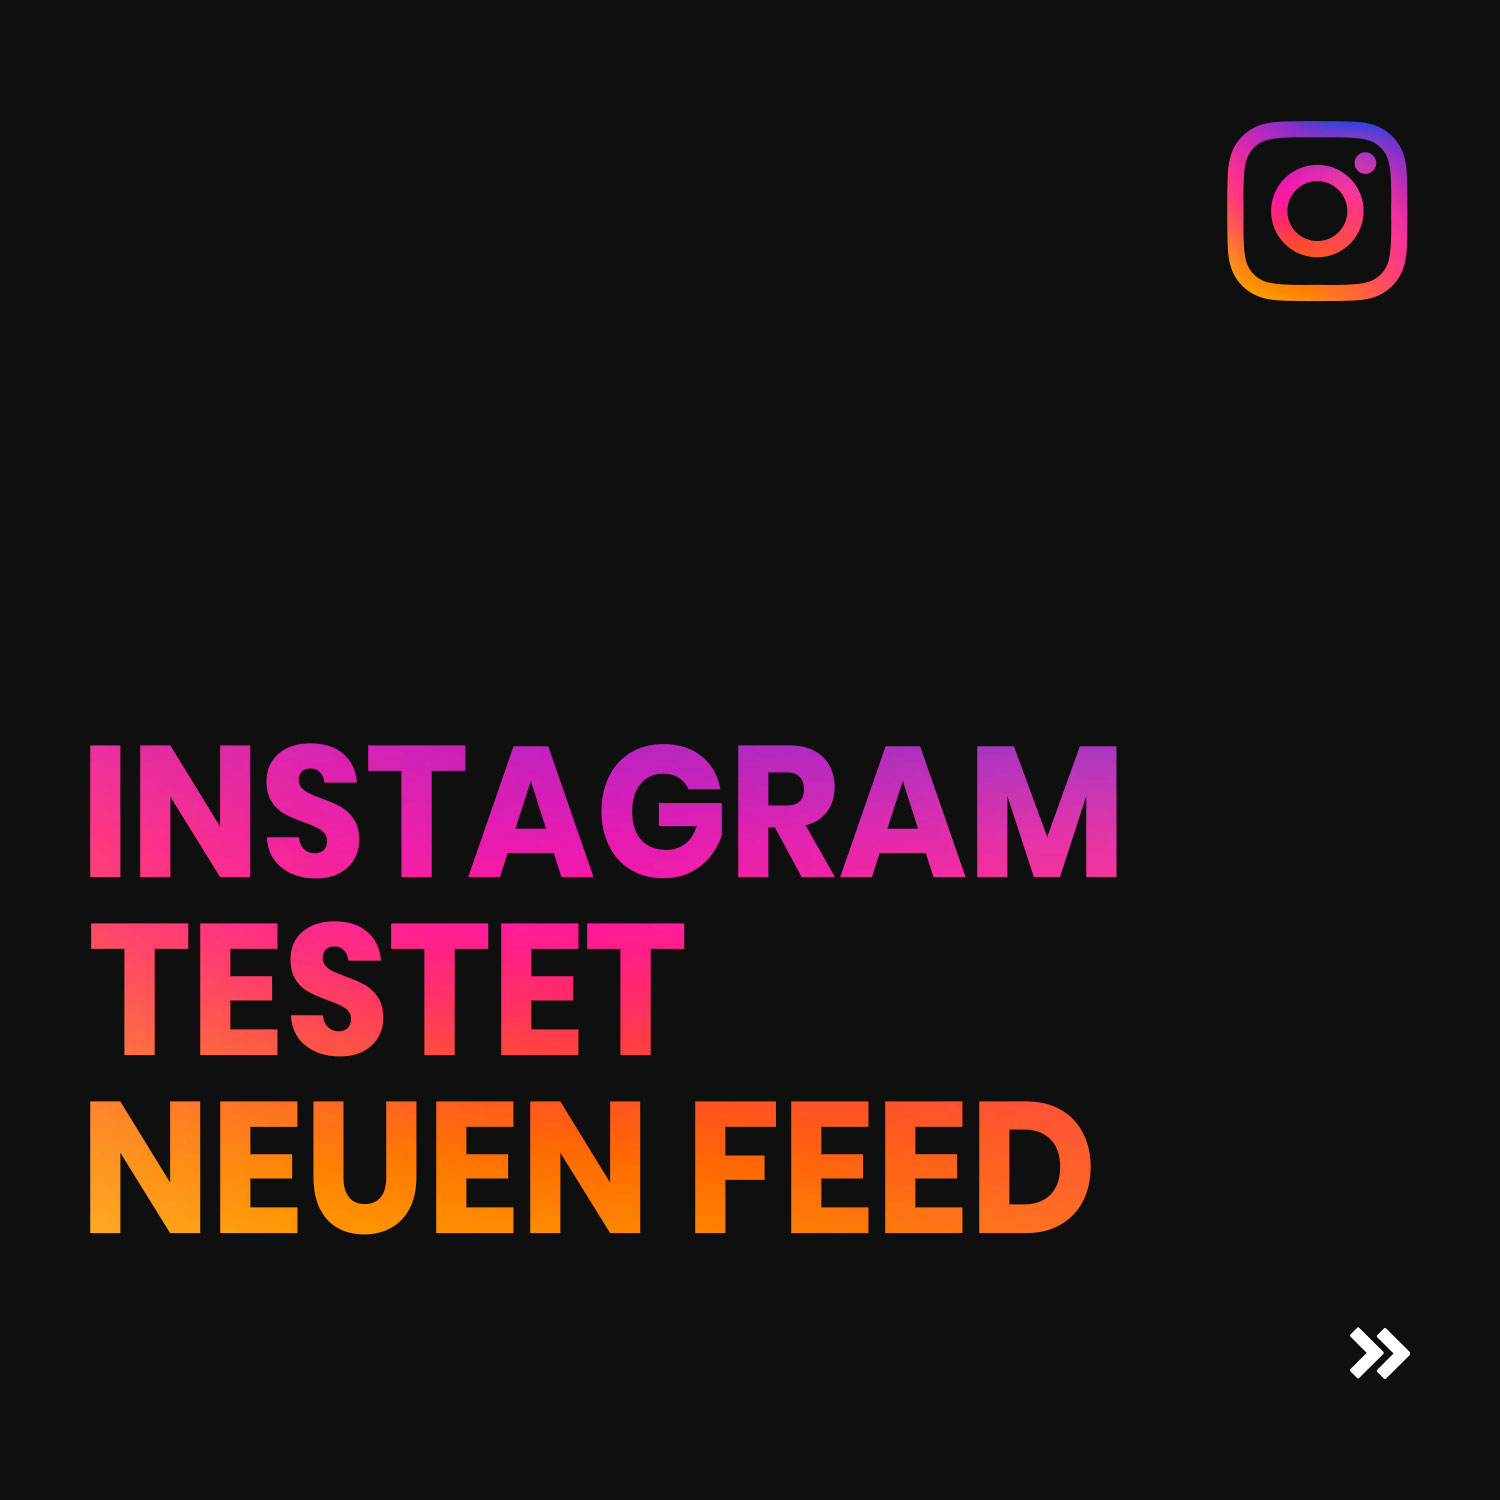 Instagram teste neuen Feed - Beitrag new media labs